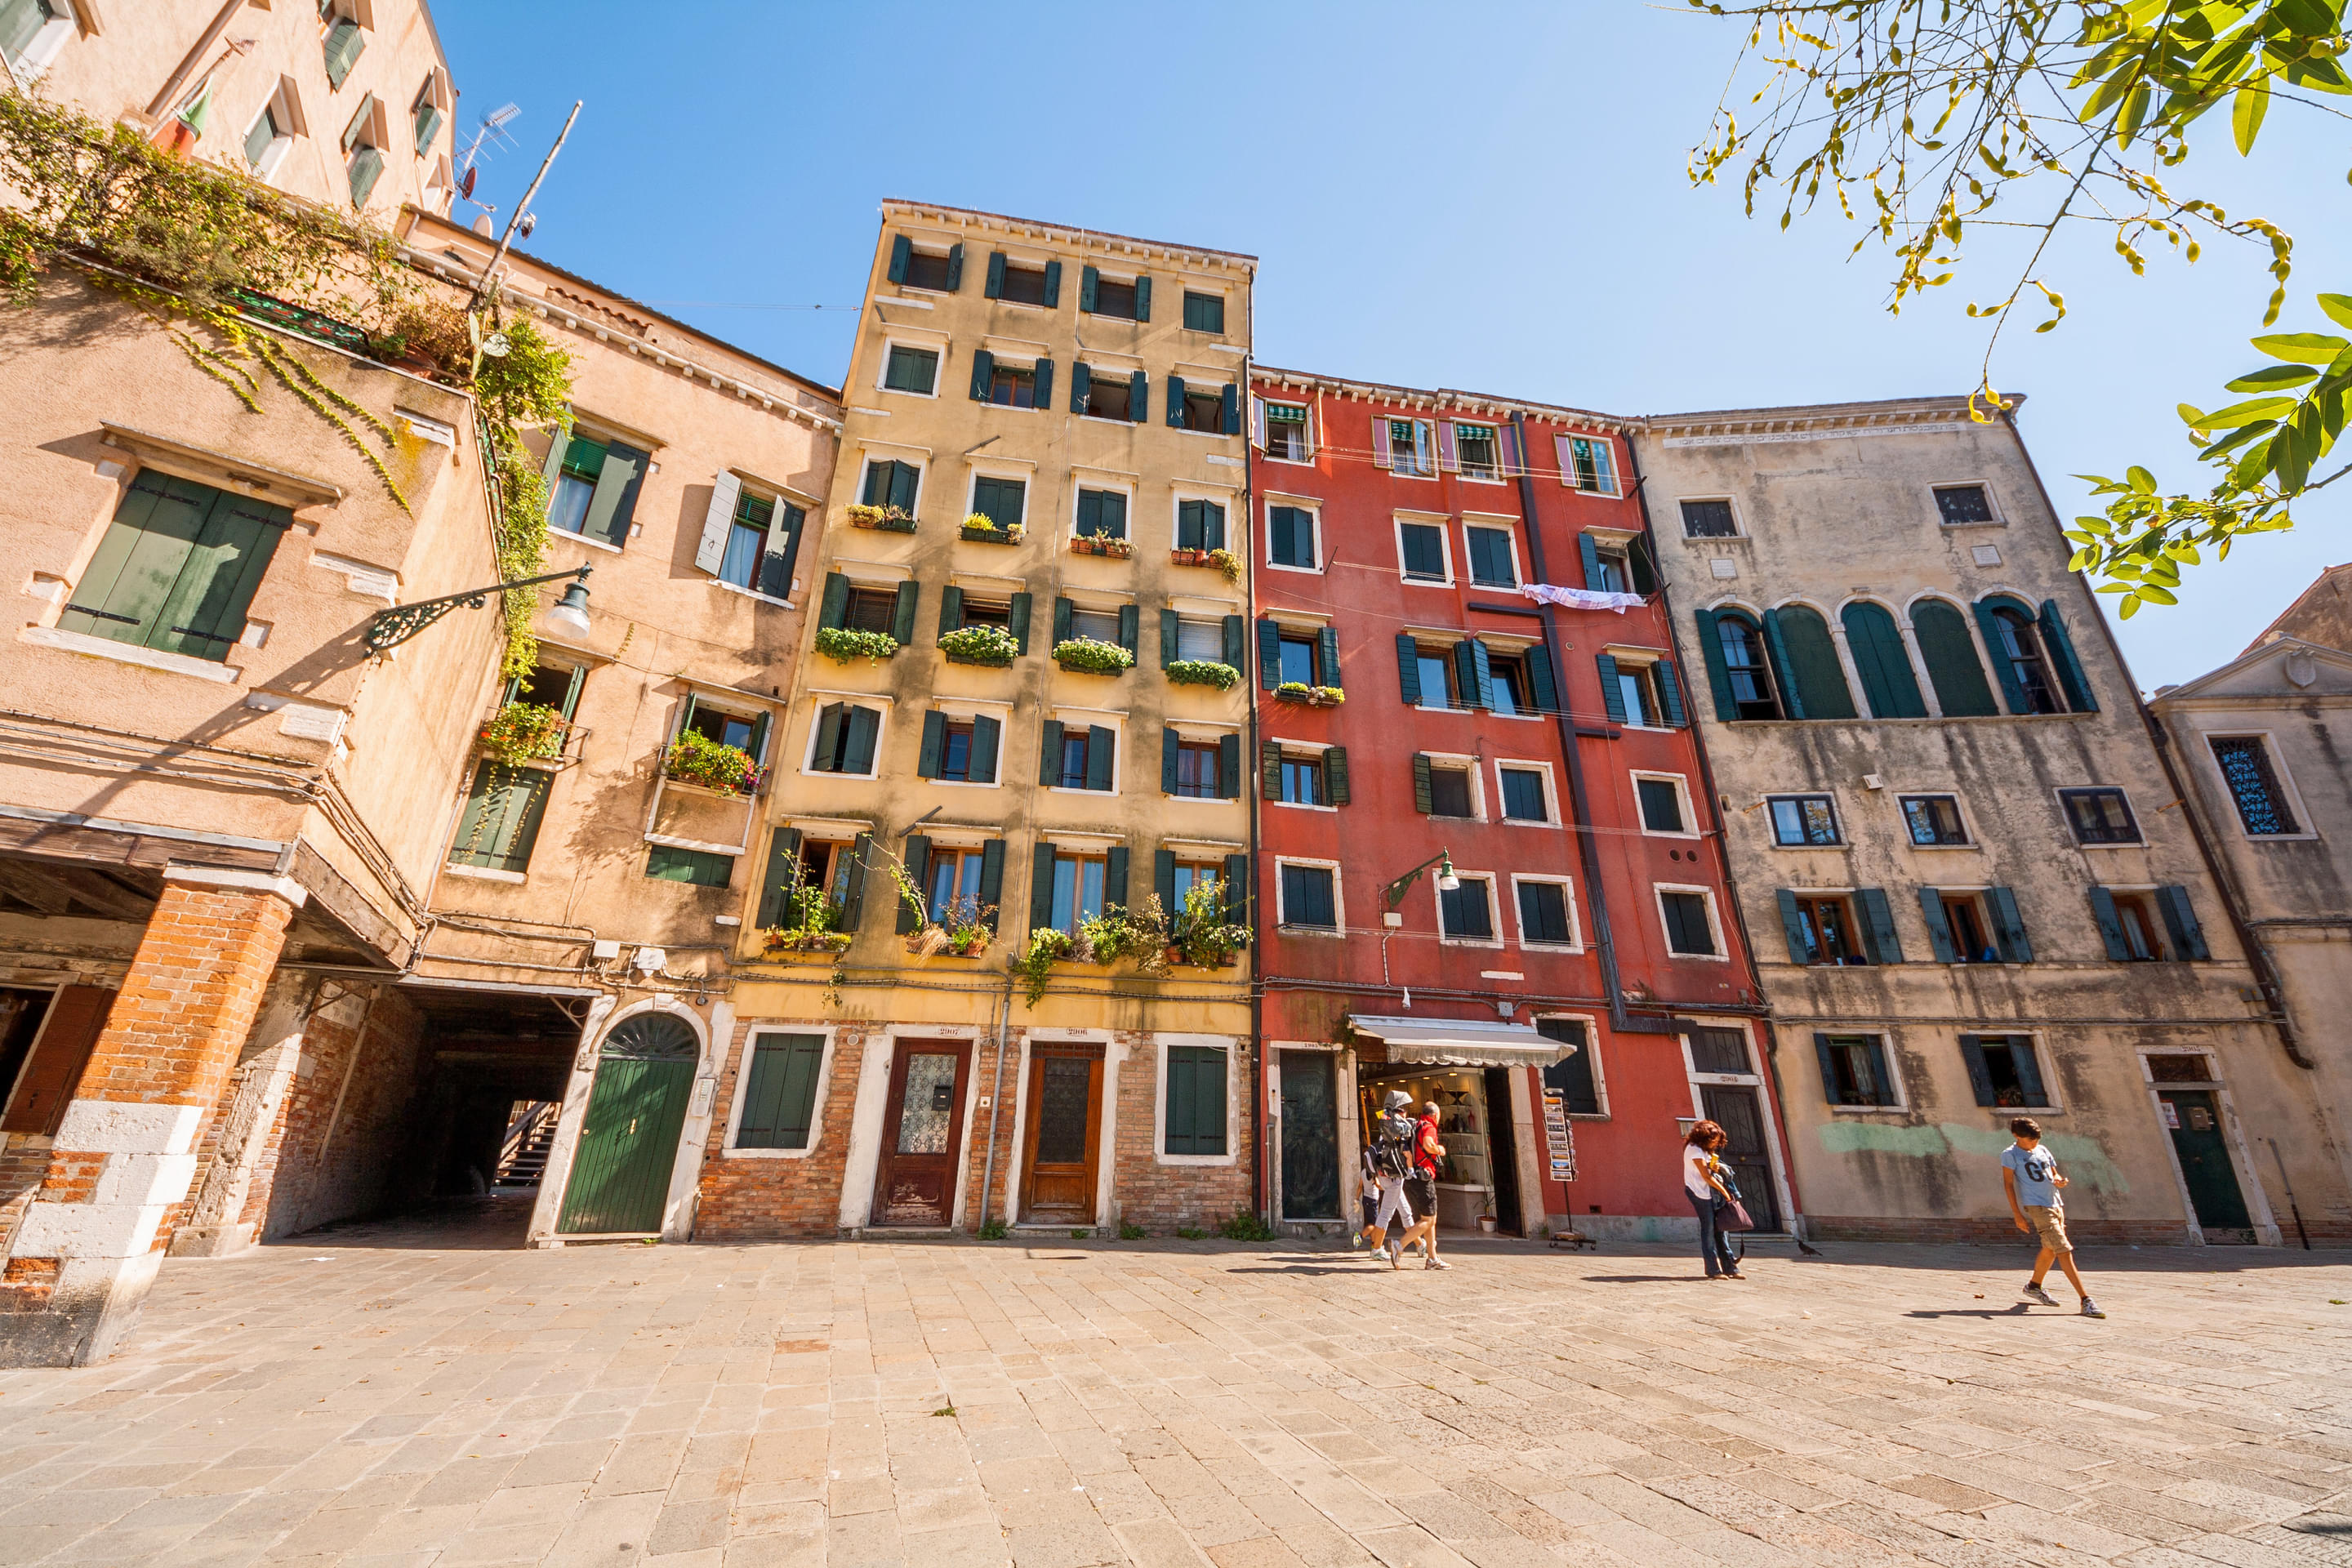 Venetian Ghetto Overview